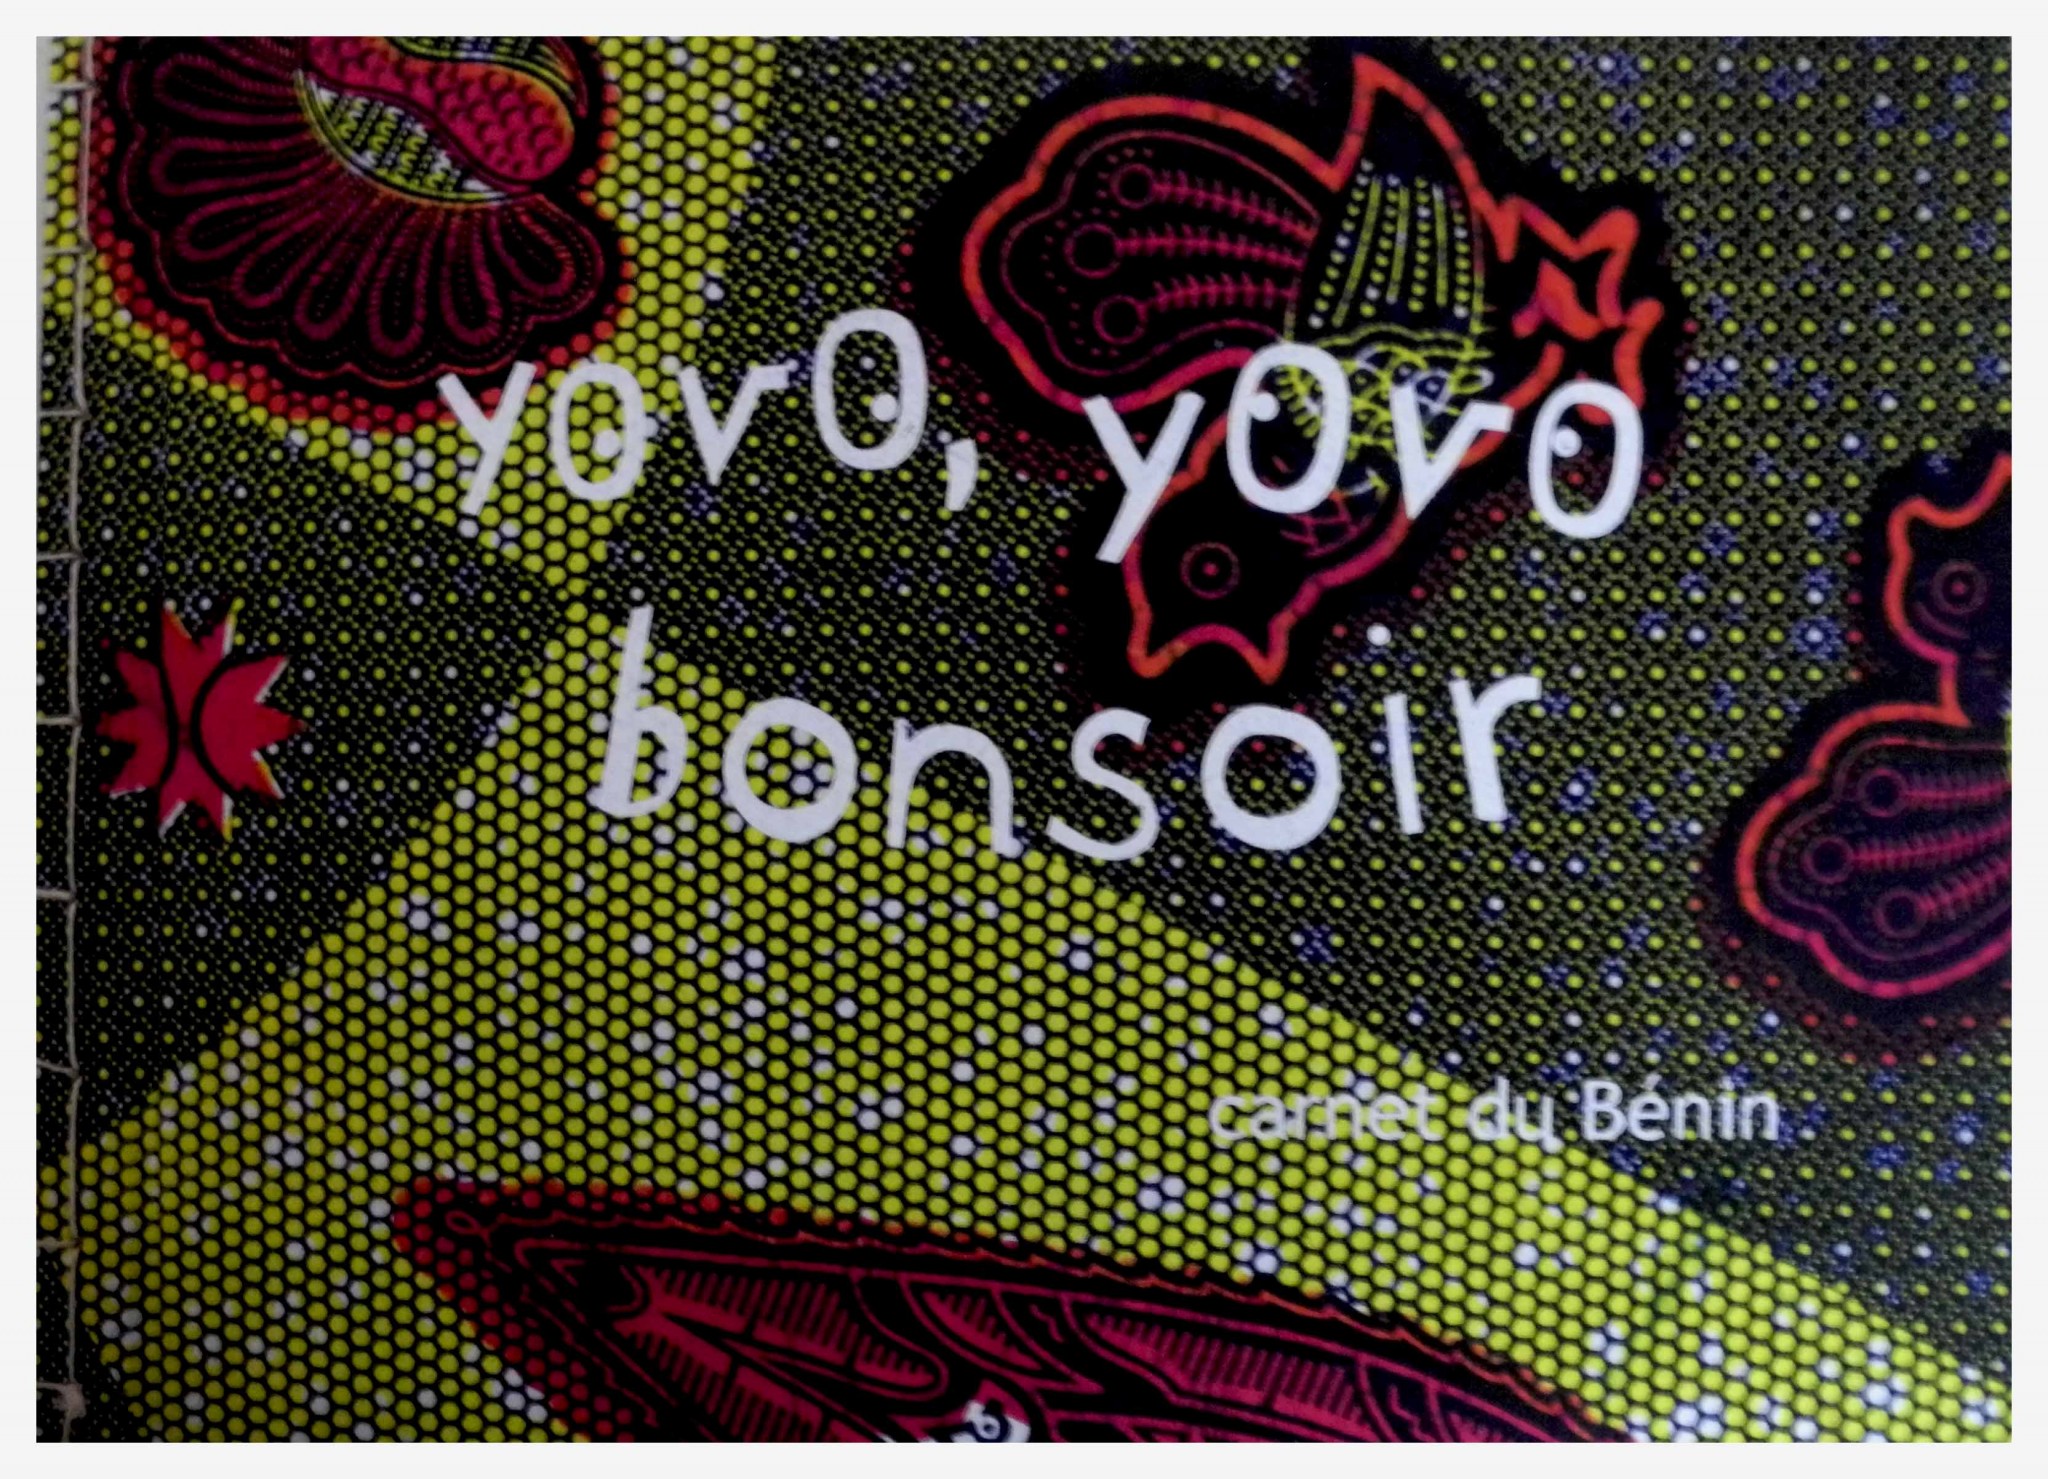 Yovo, yovo bonsoir (carnets du Bénin)